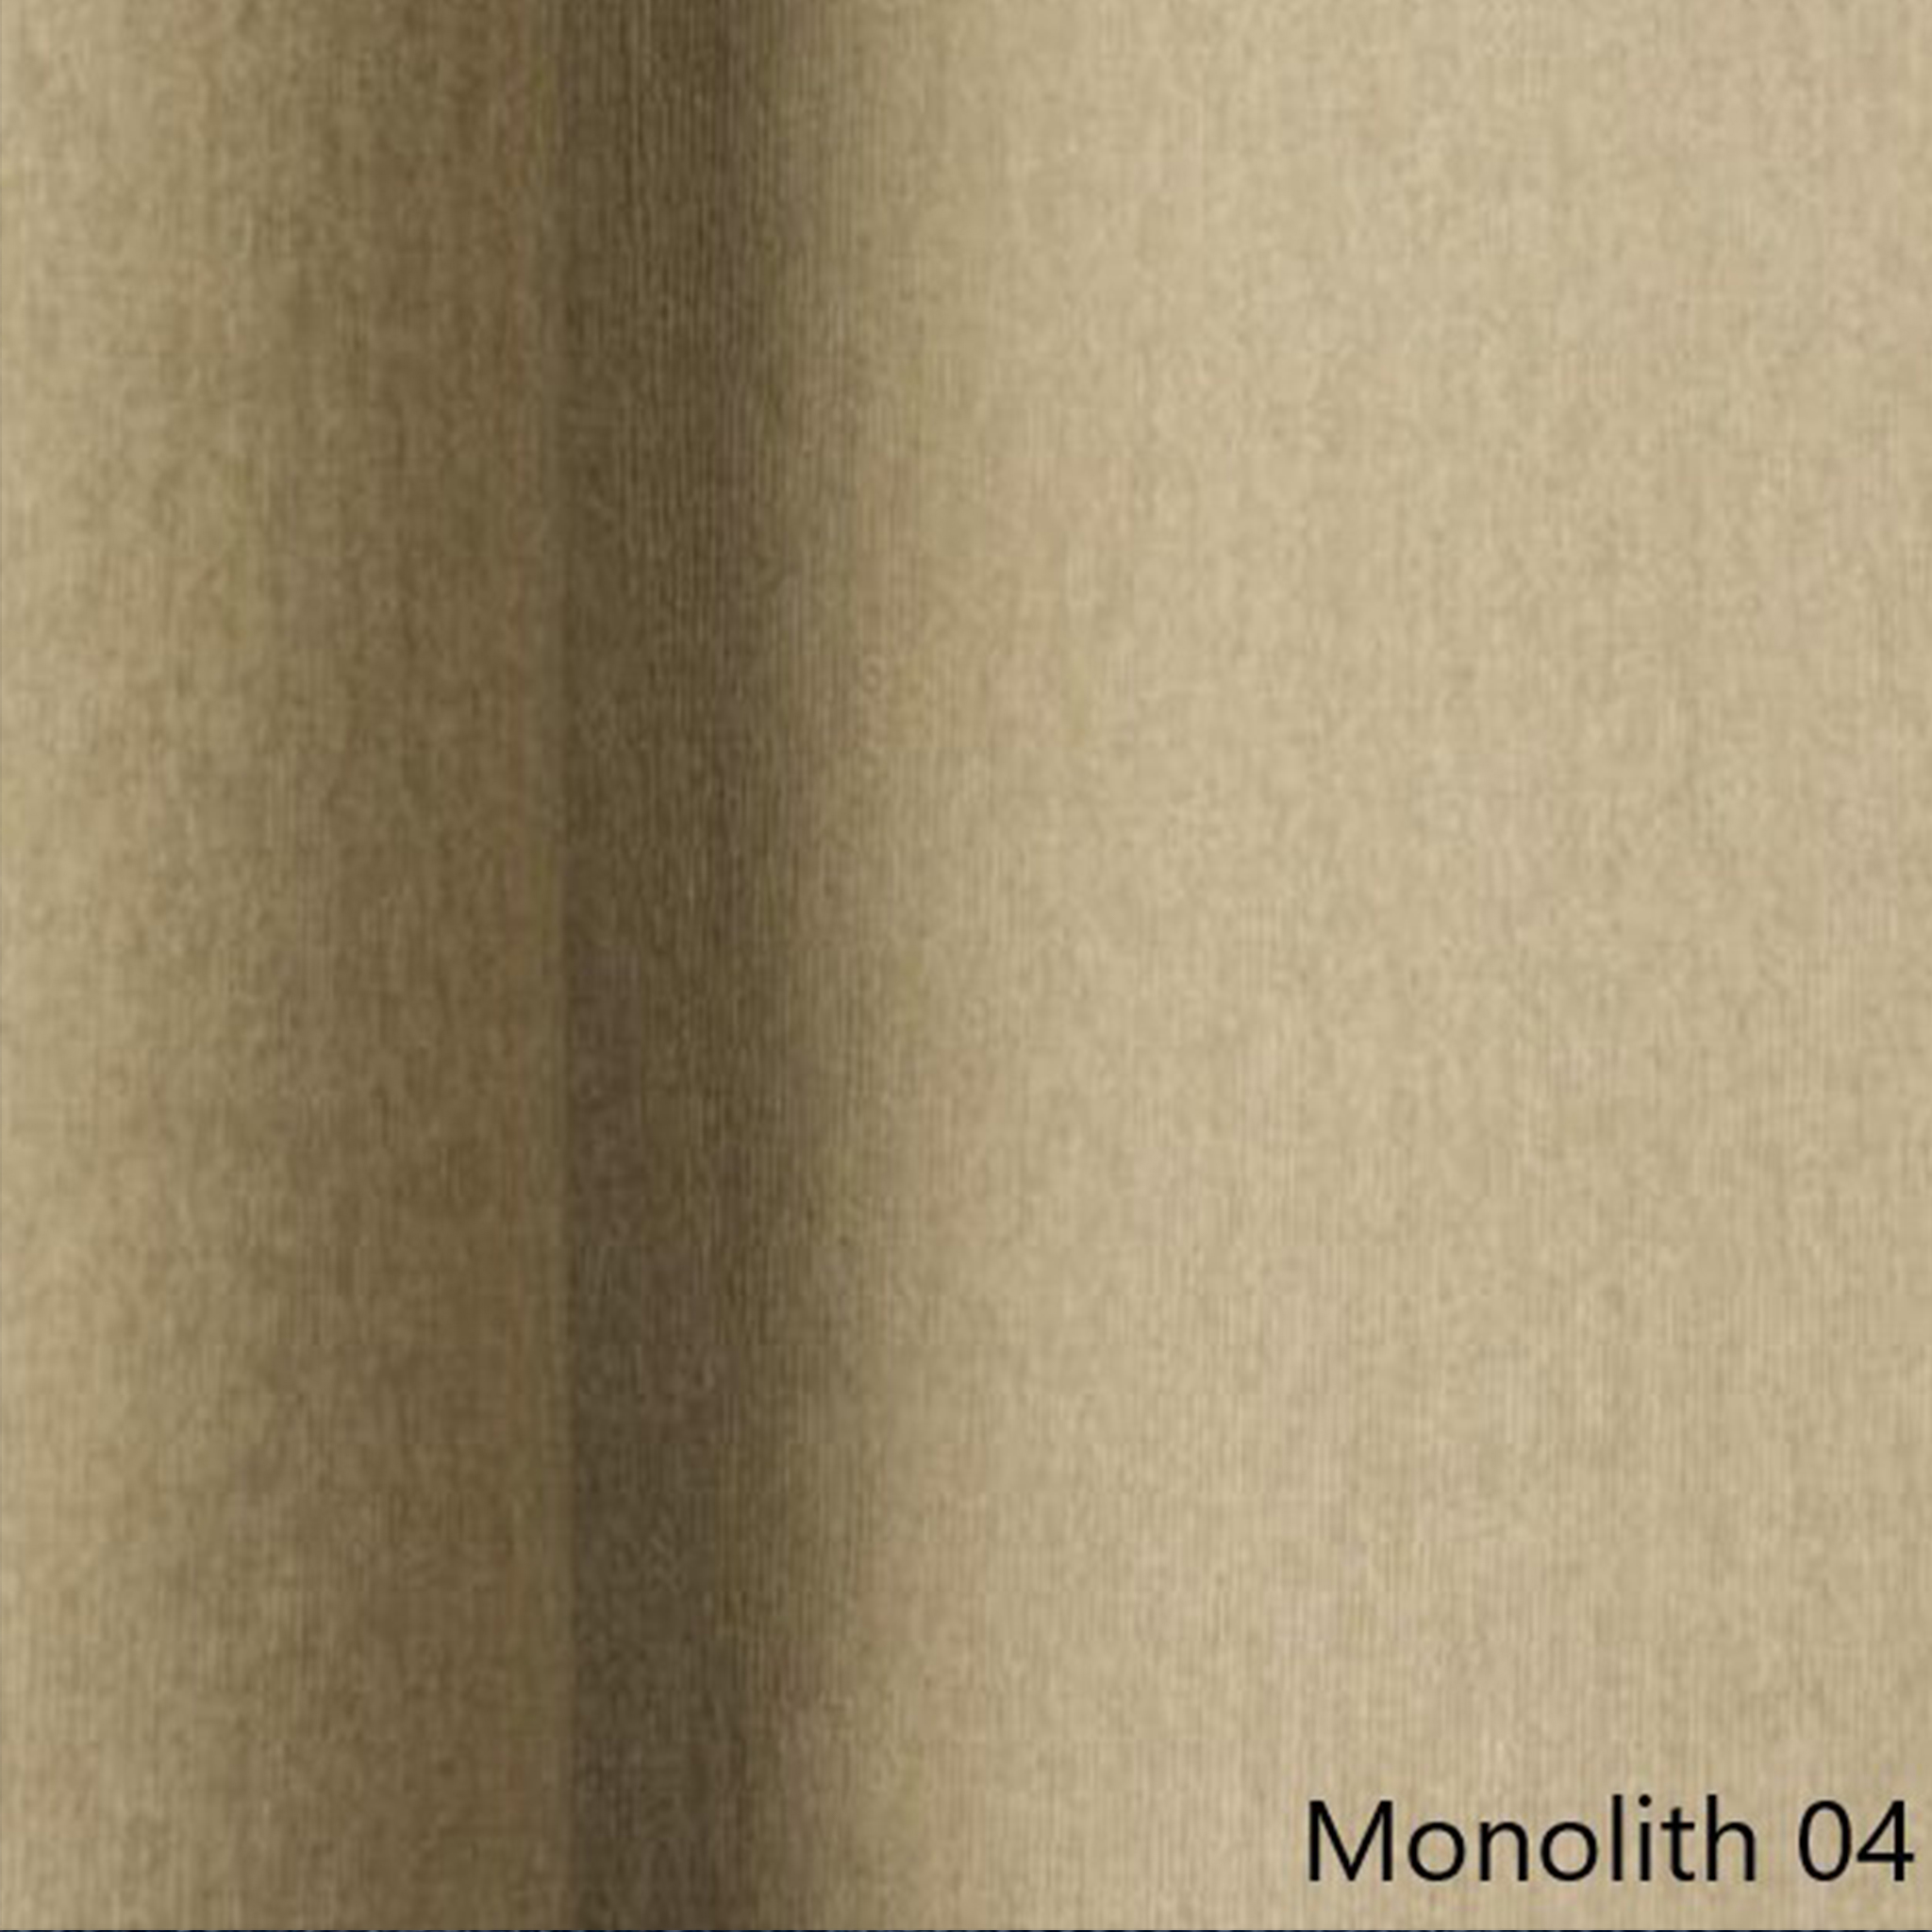 GR. 2 – Monolith 04